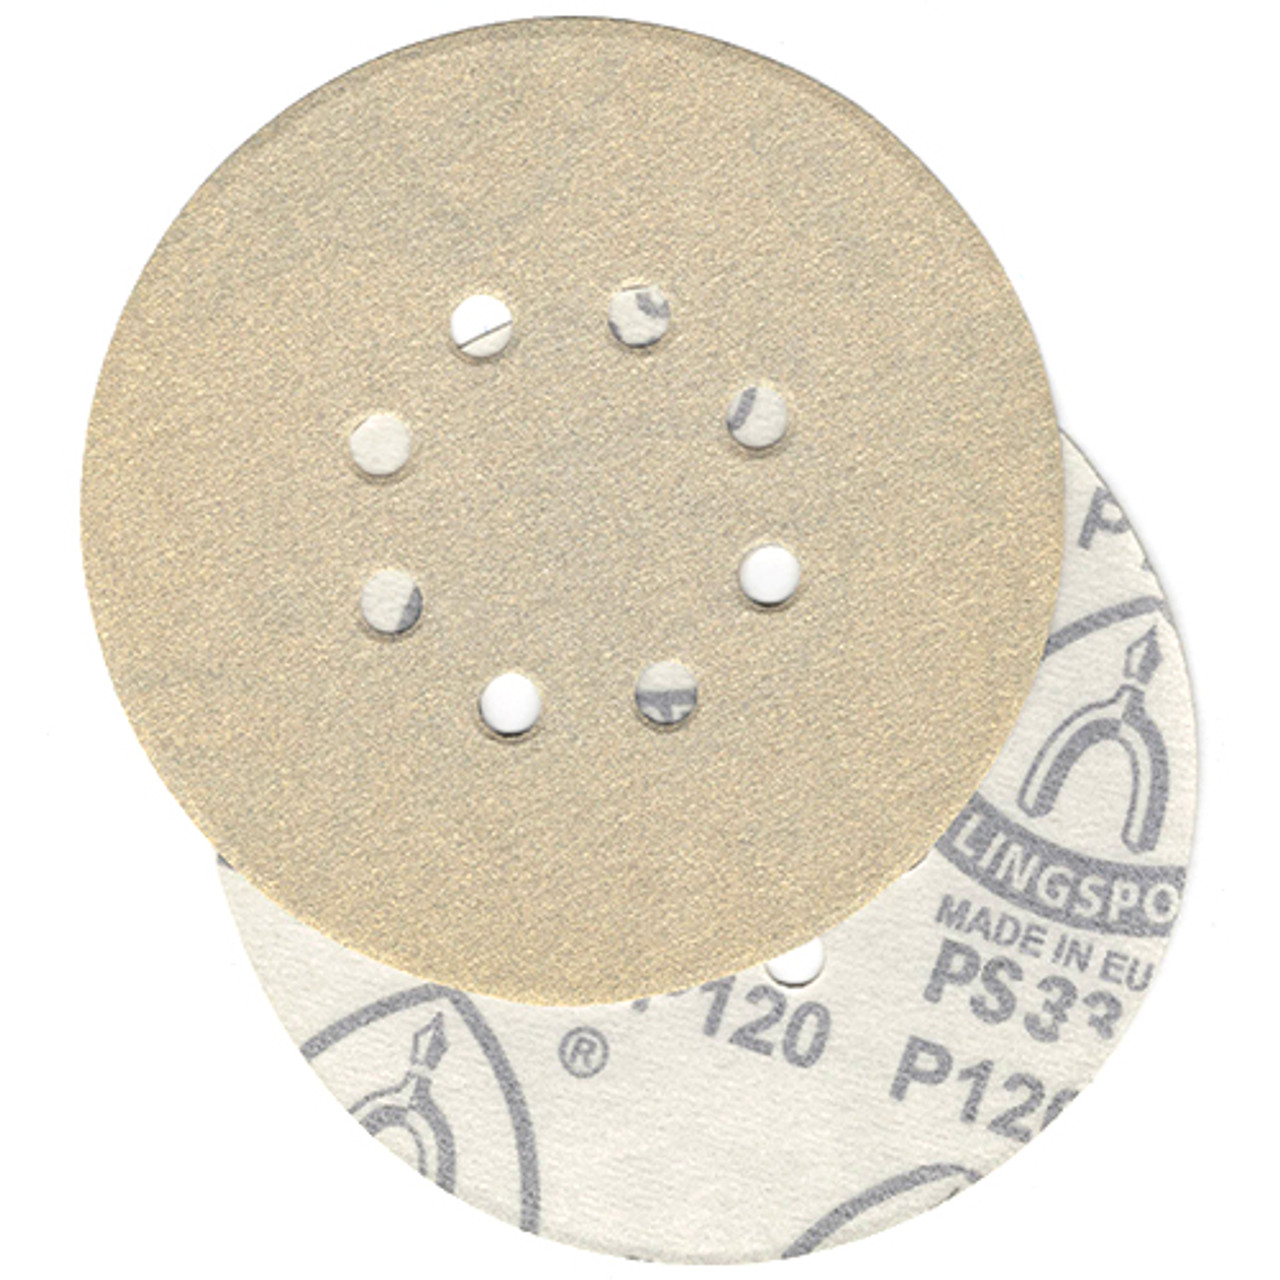 Klingspor Abrasives Stearate Aluminum Oxide, PS33, 6"x 8 Hole, 220 Grit, Hook & Loop Discs, 10pk